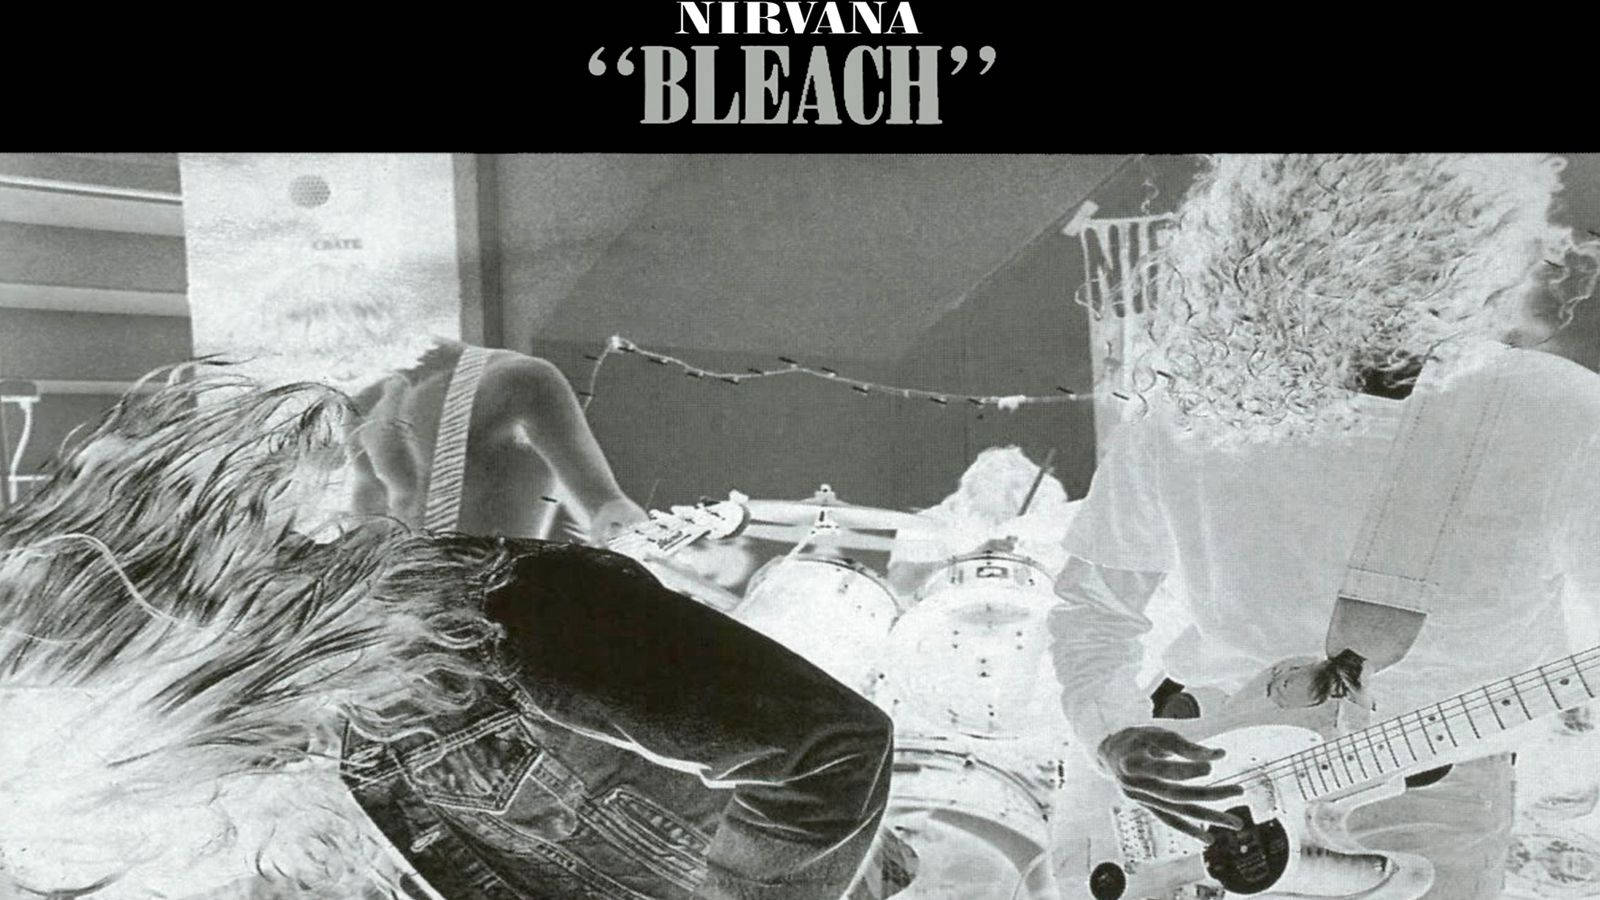 Nirvana Bleach Album Cover Background